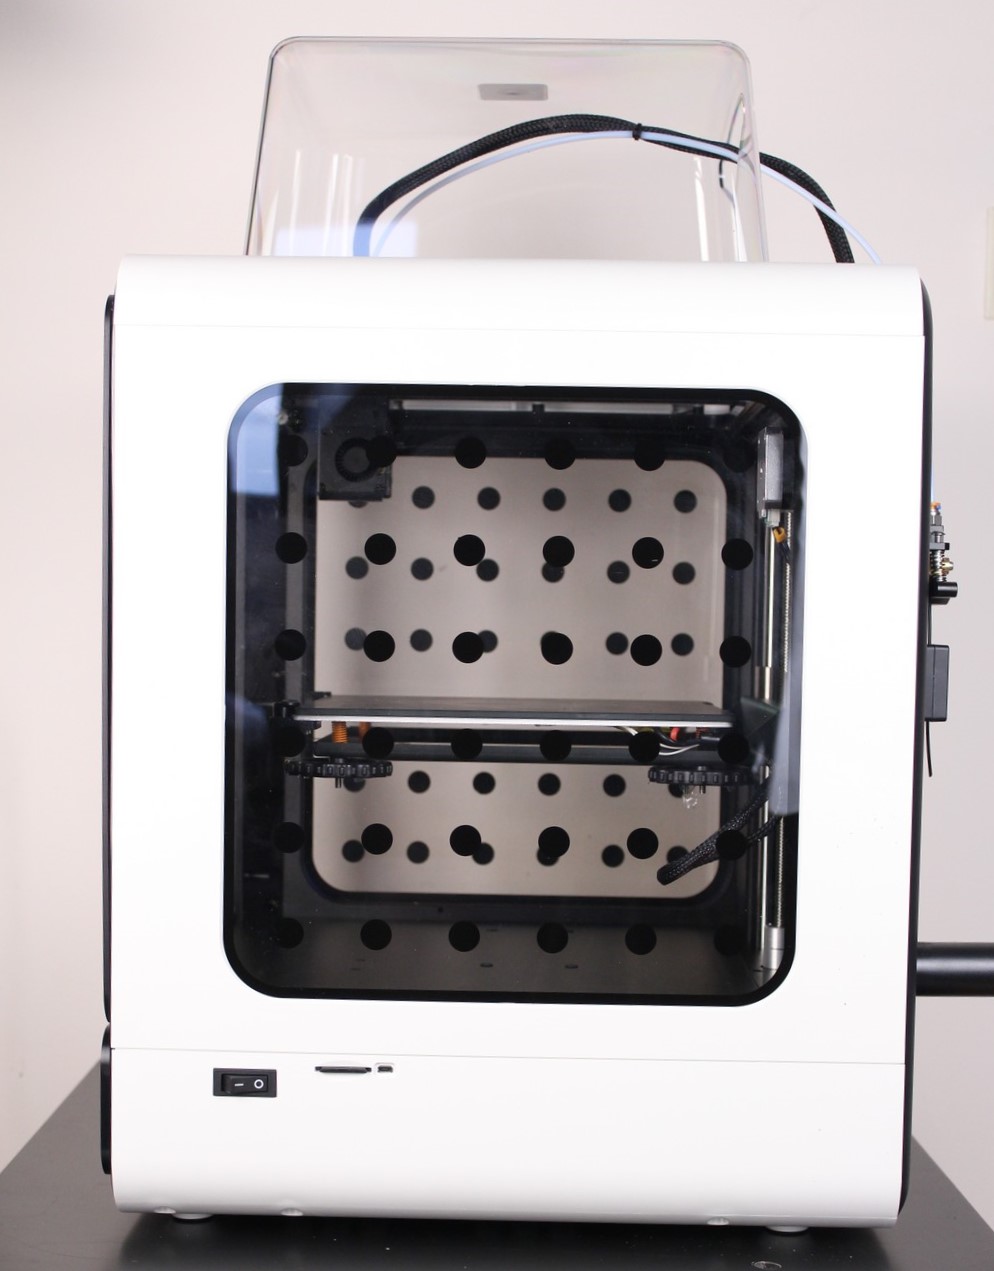 Creality CR 200B review Design 2 | Creality CR-200B Review: Budget Enclosed 3D Printer